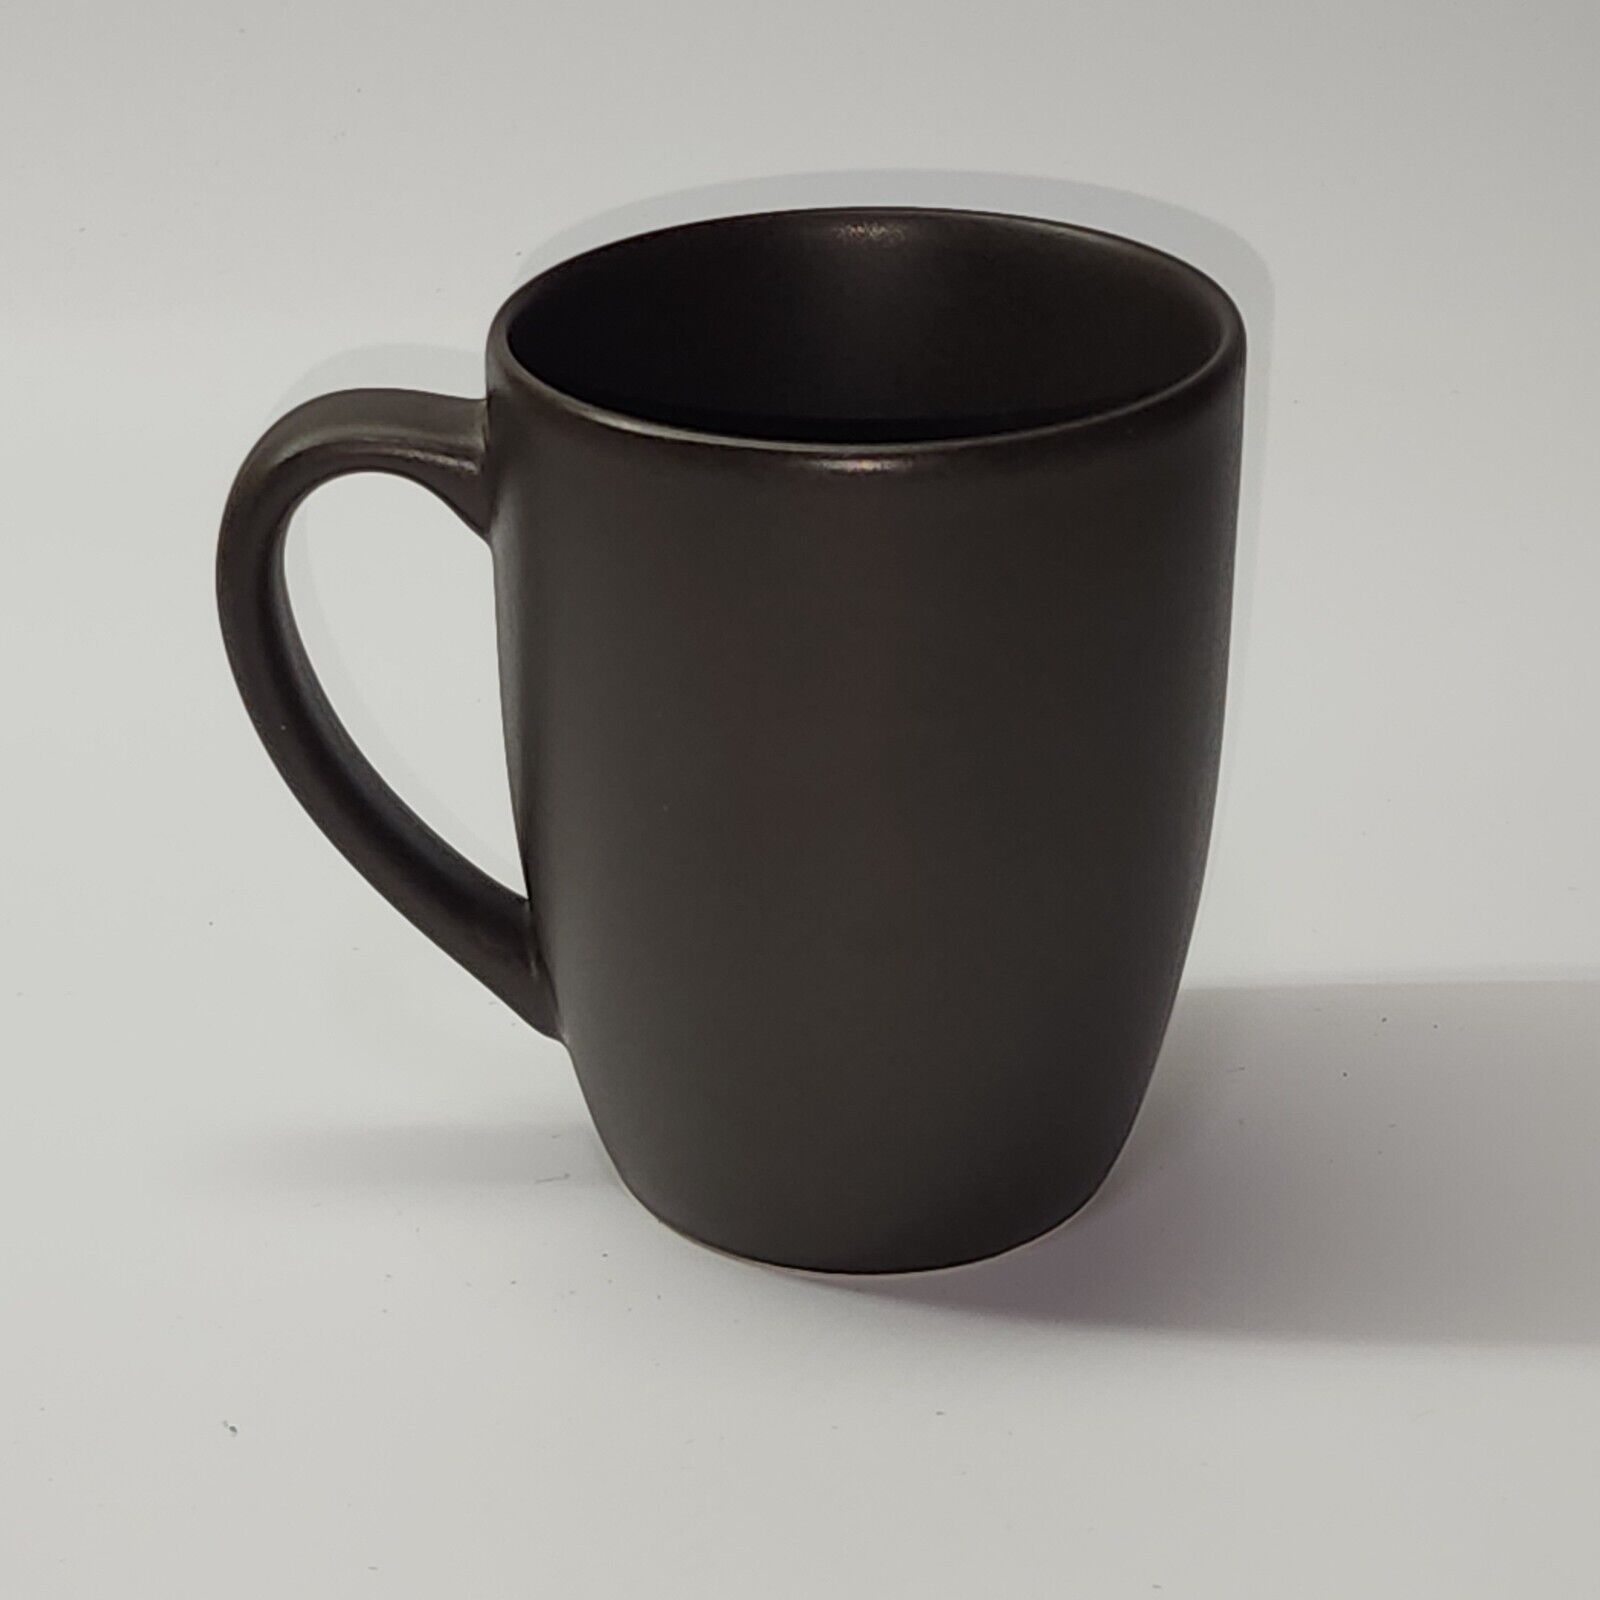 World View BLACK ONYX Coffee Tea Cup Mug - Dishwasher Microwave Safe, NEVER USED